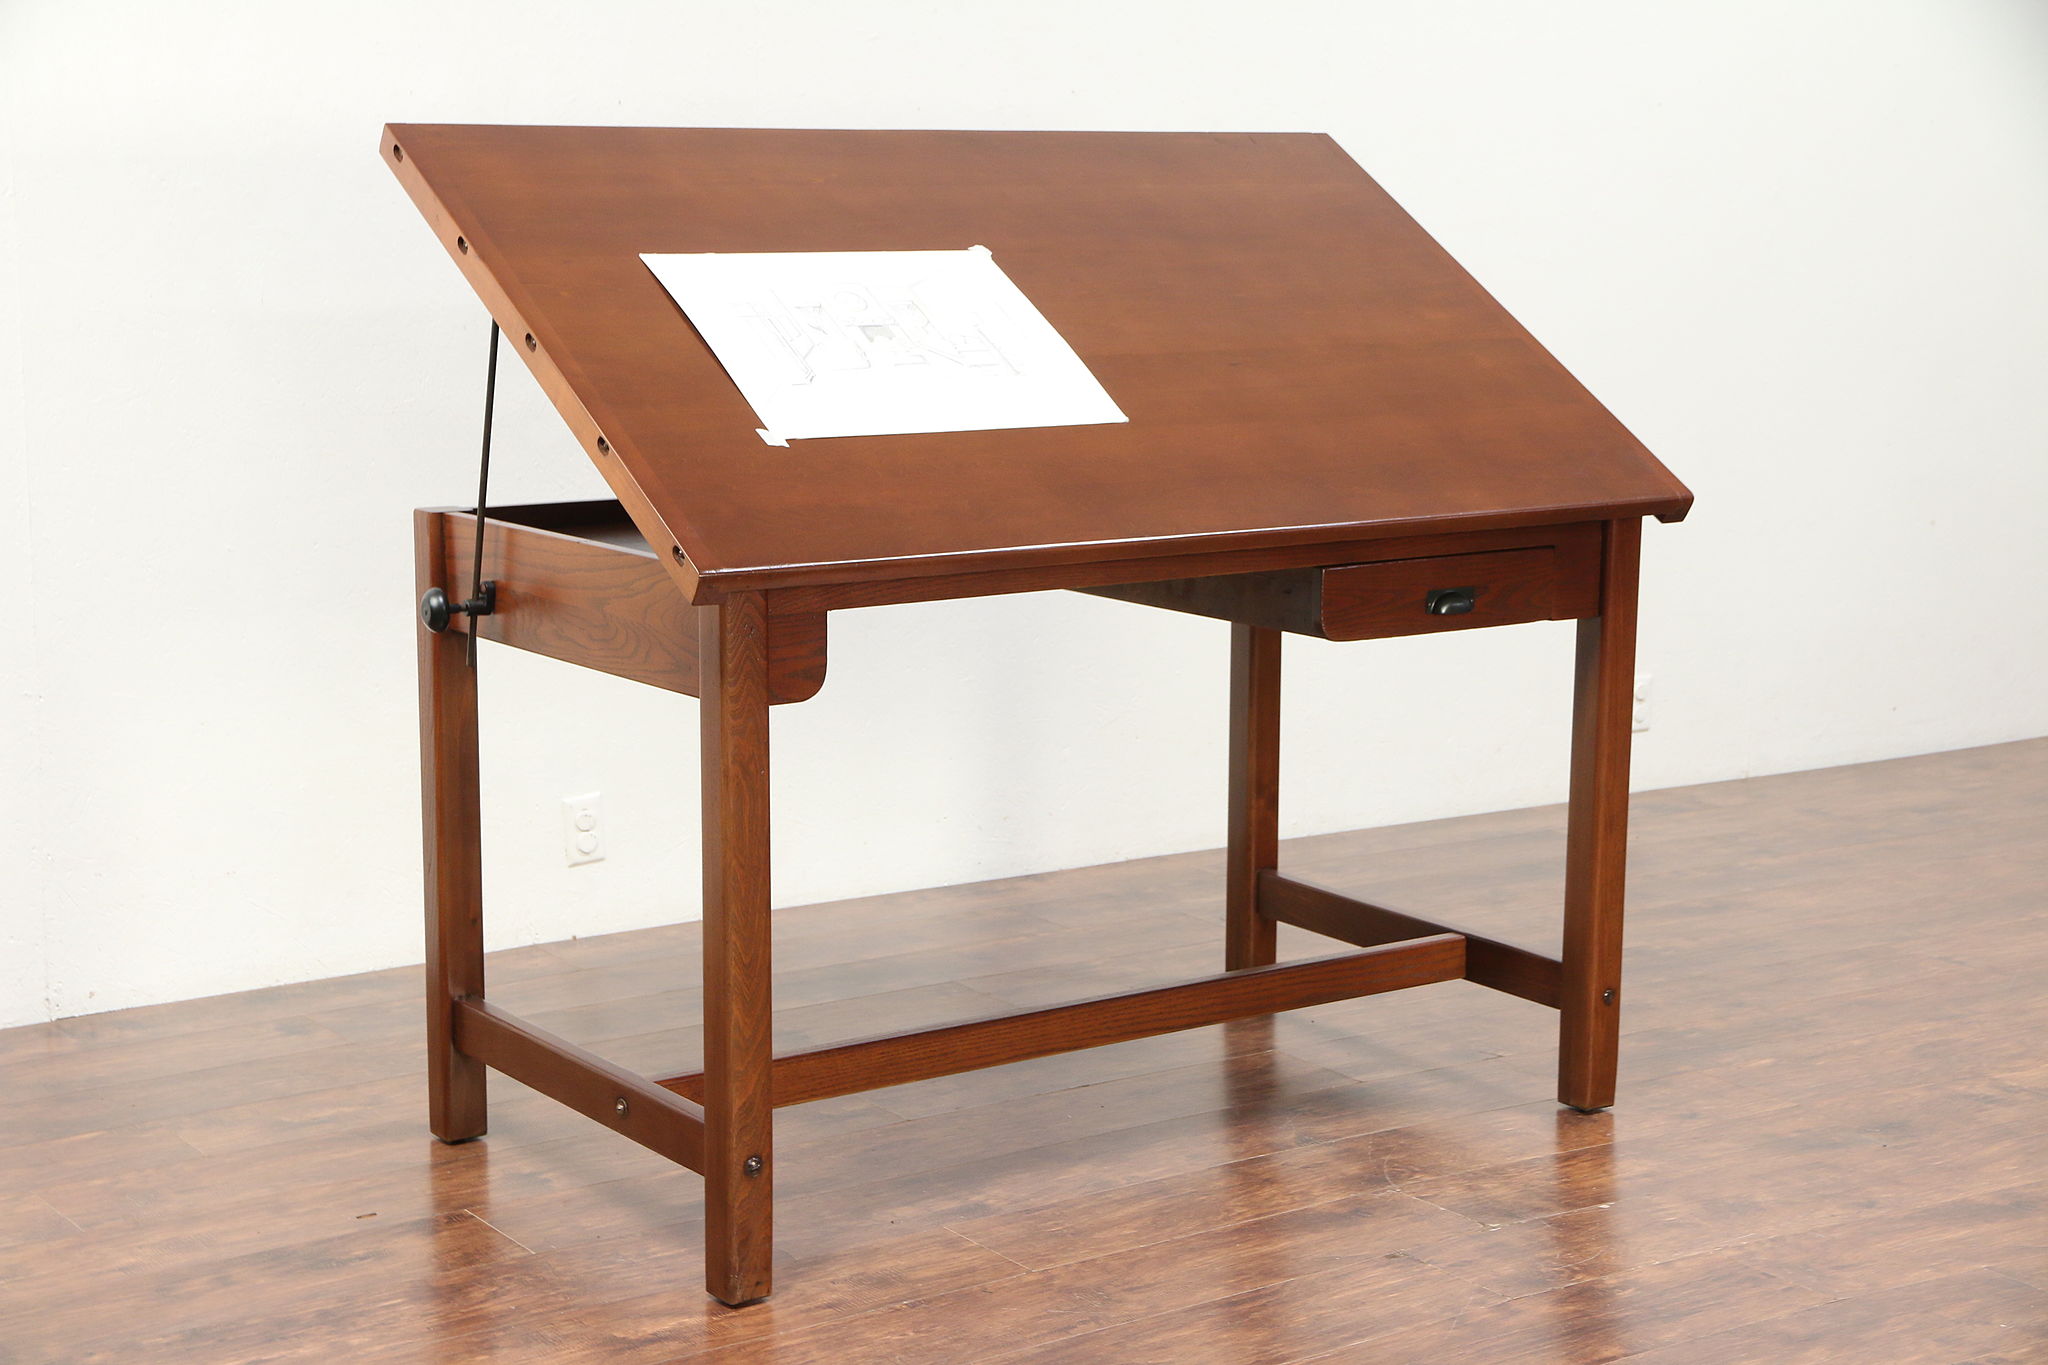 Sold Architect Or Artist Desk Vintage Drafting Or Wine Table